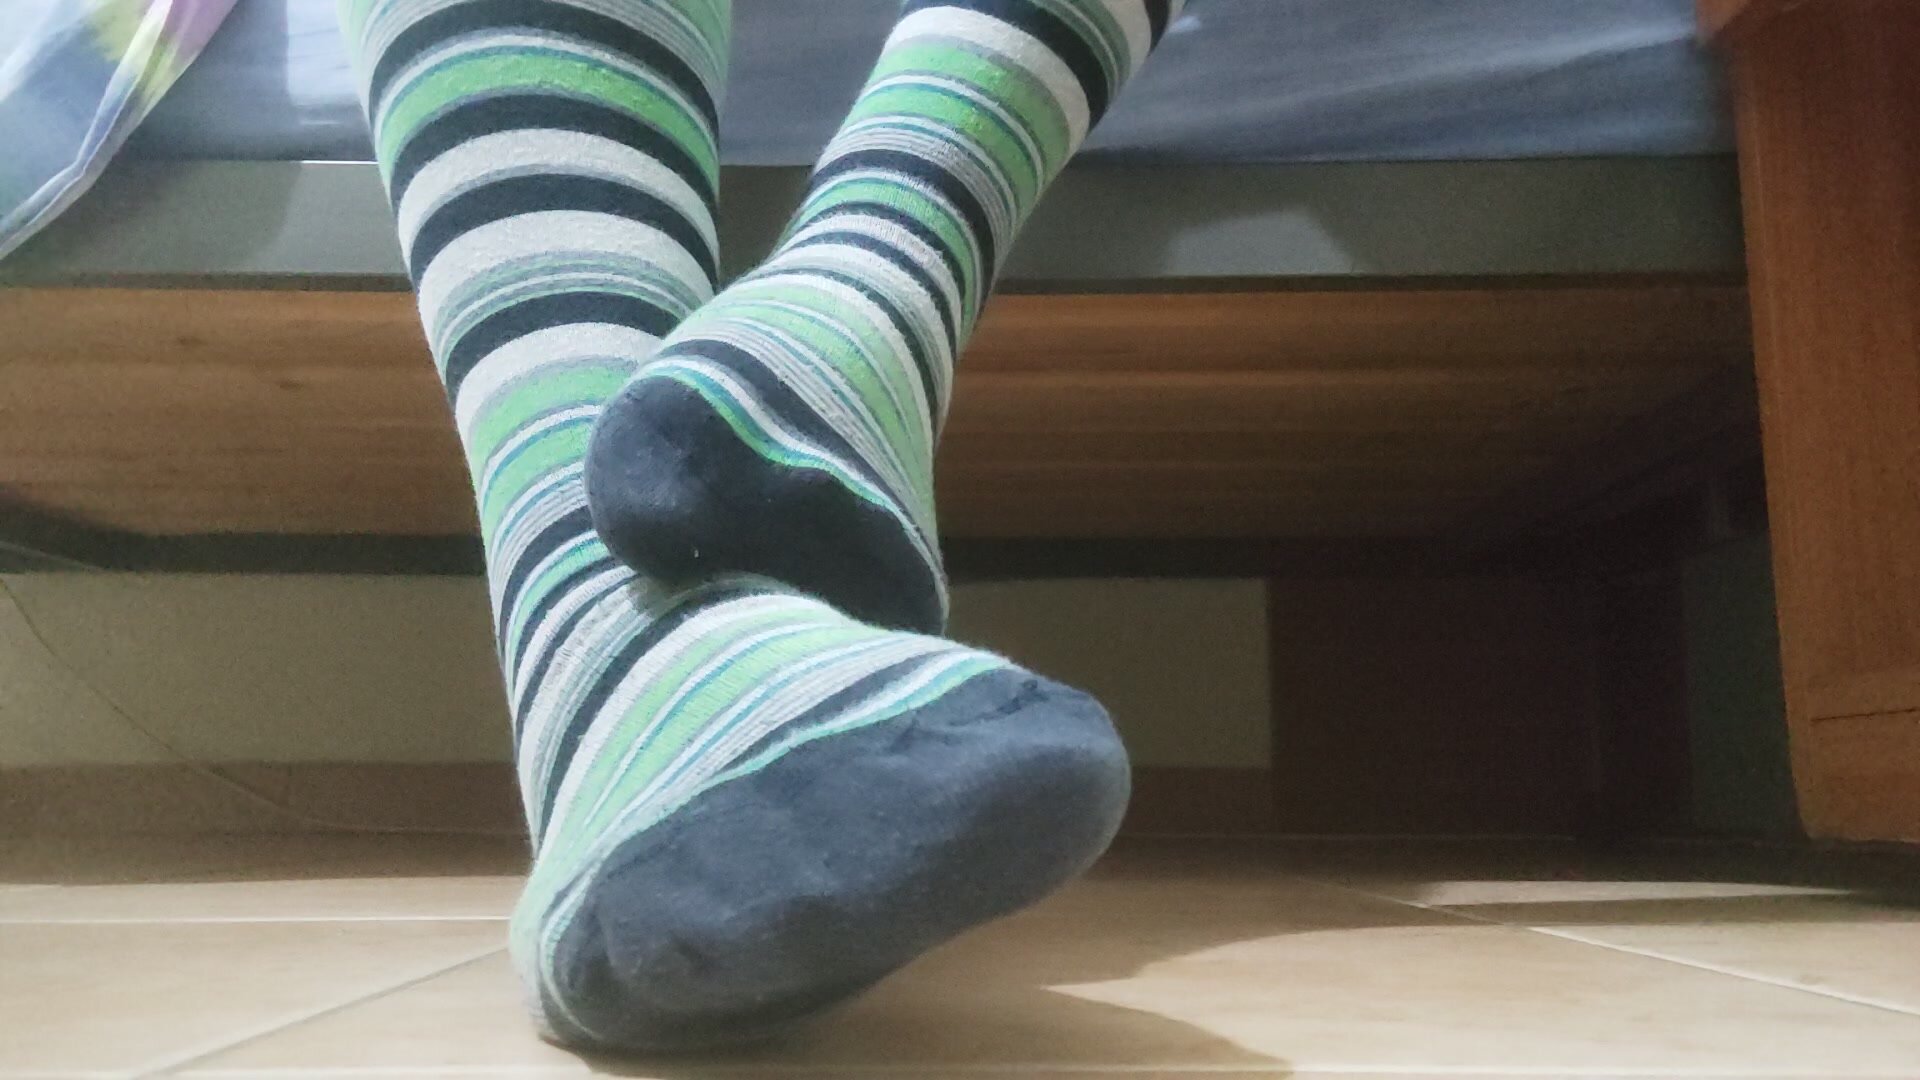 Striped socks tease